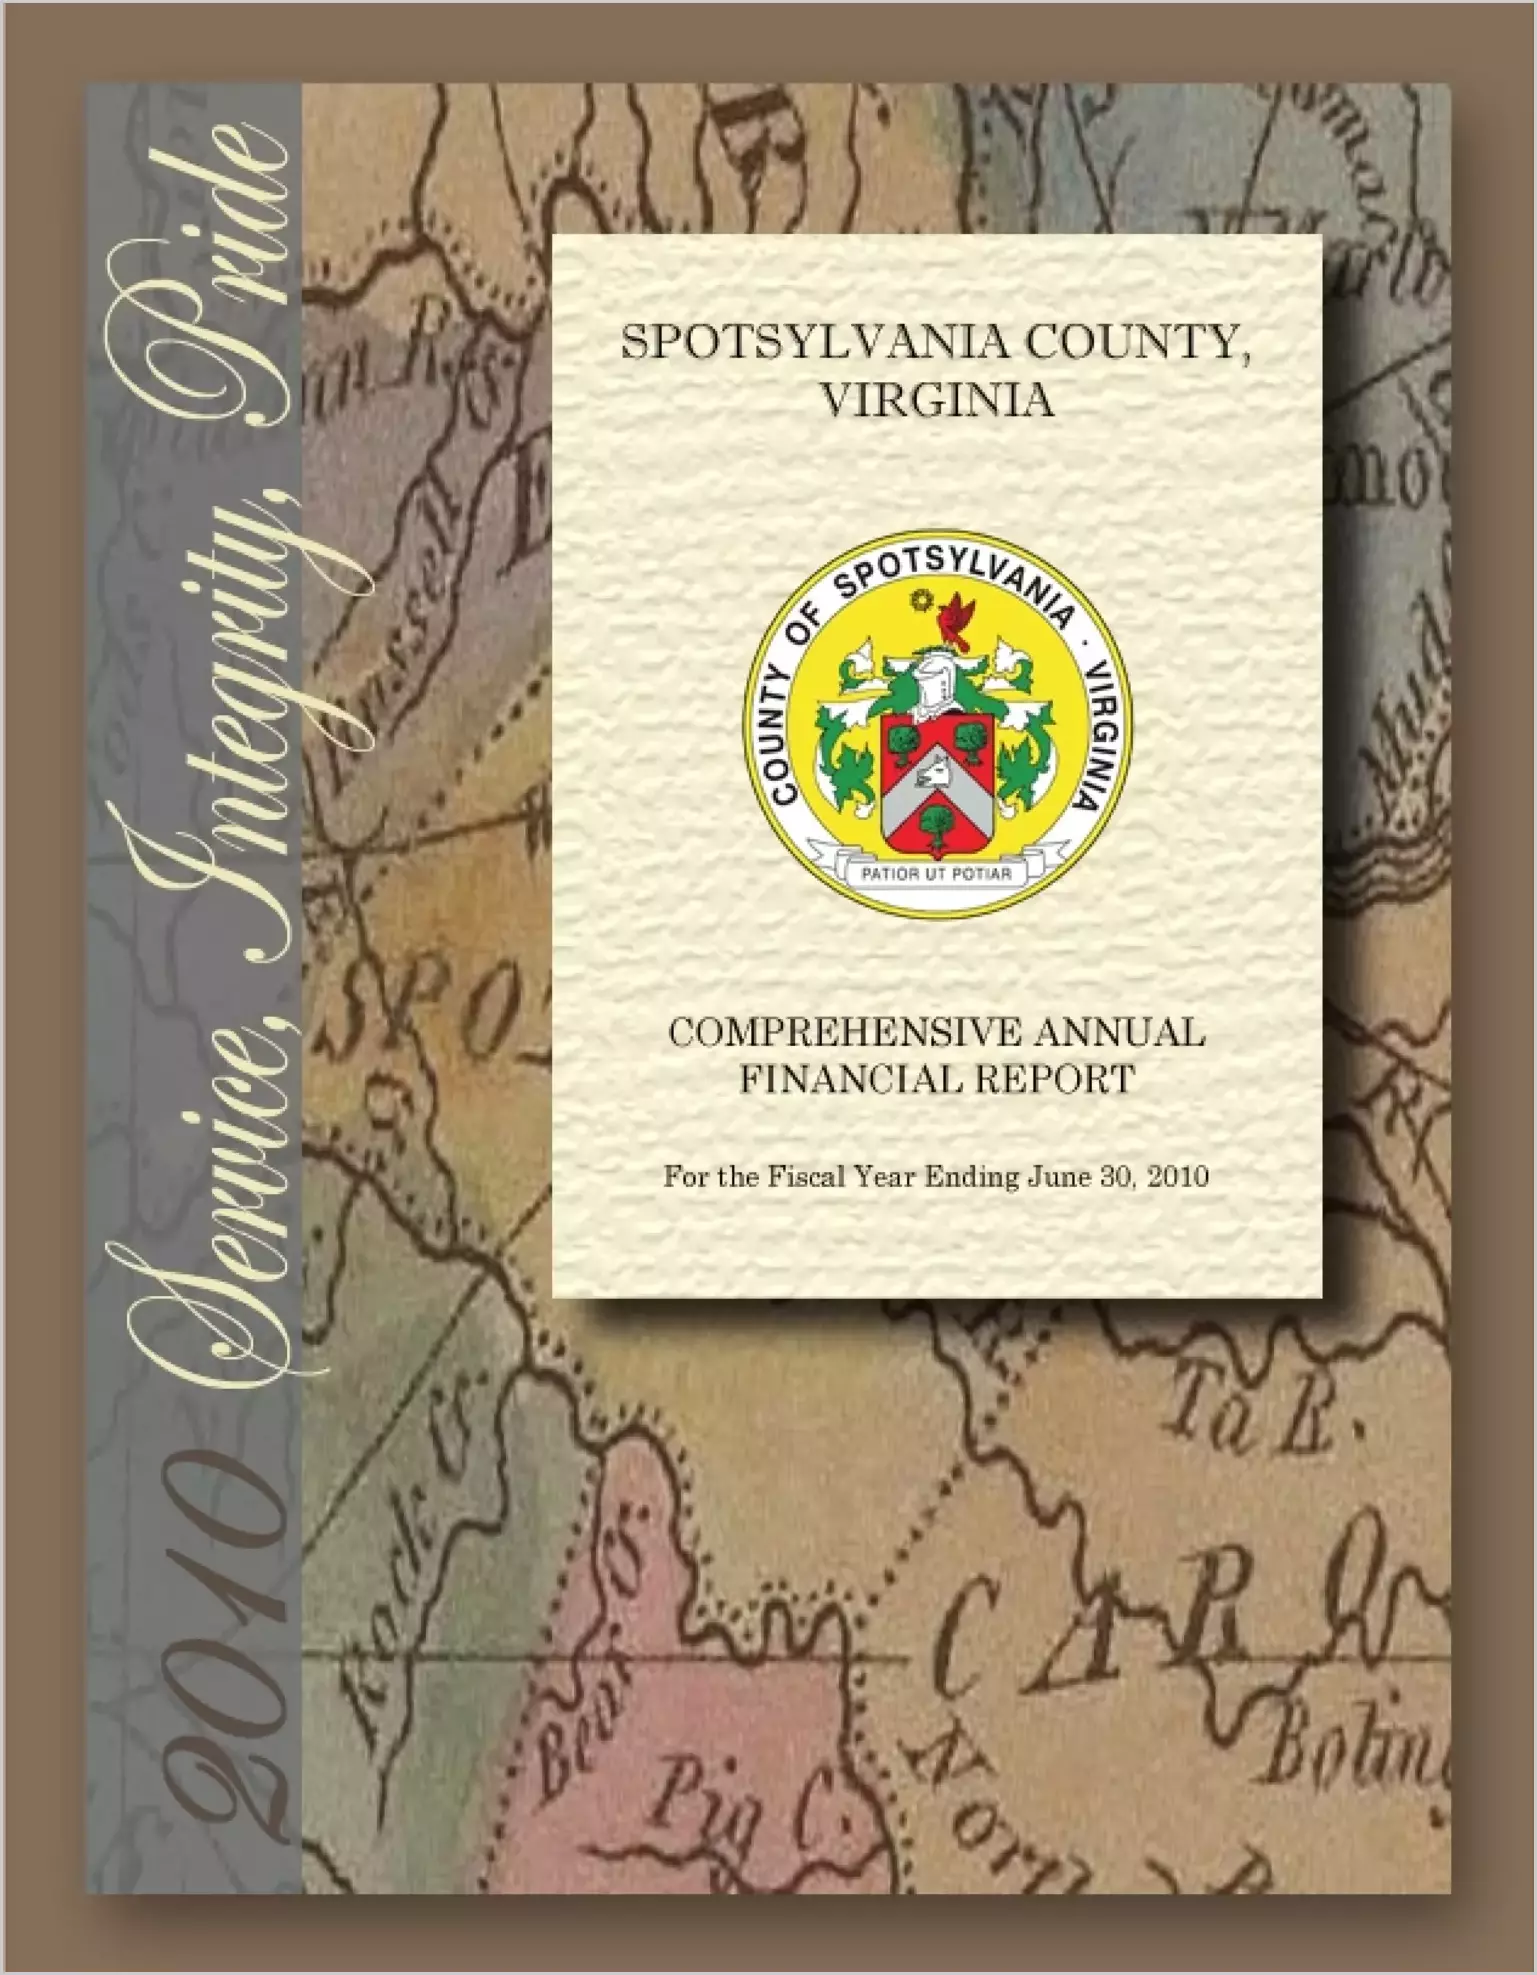 2010 Annual Financial Report for County of Spotsylvania